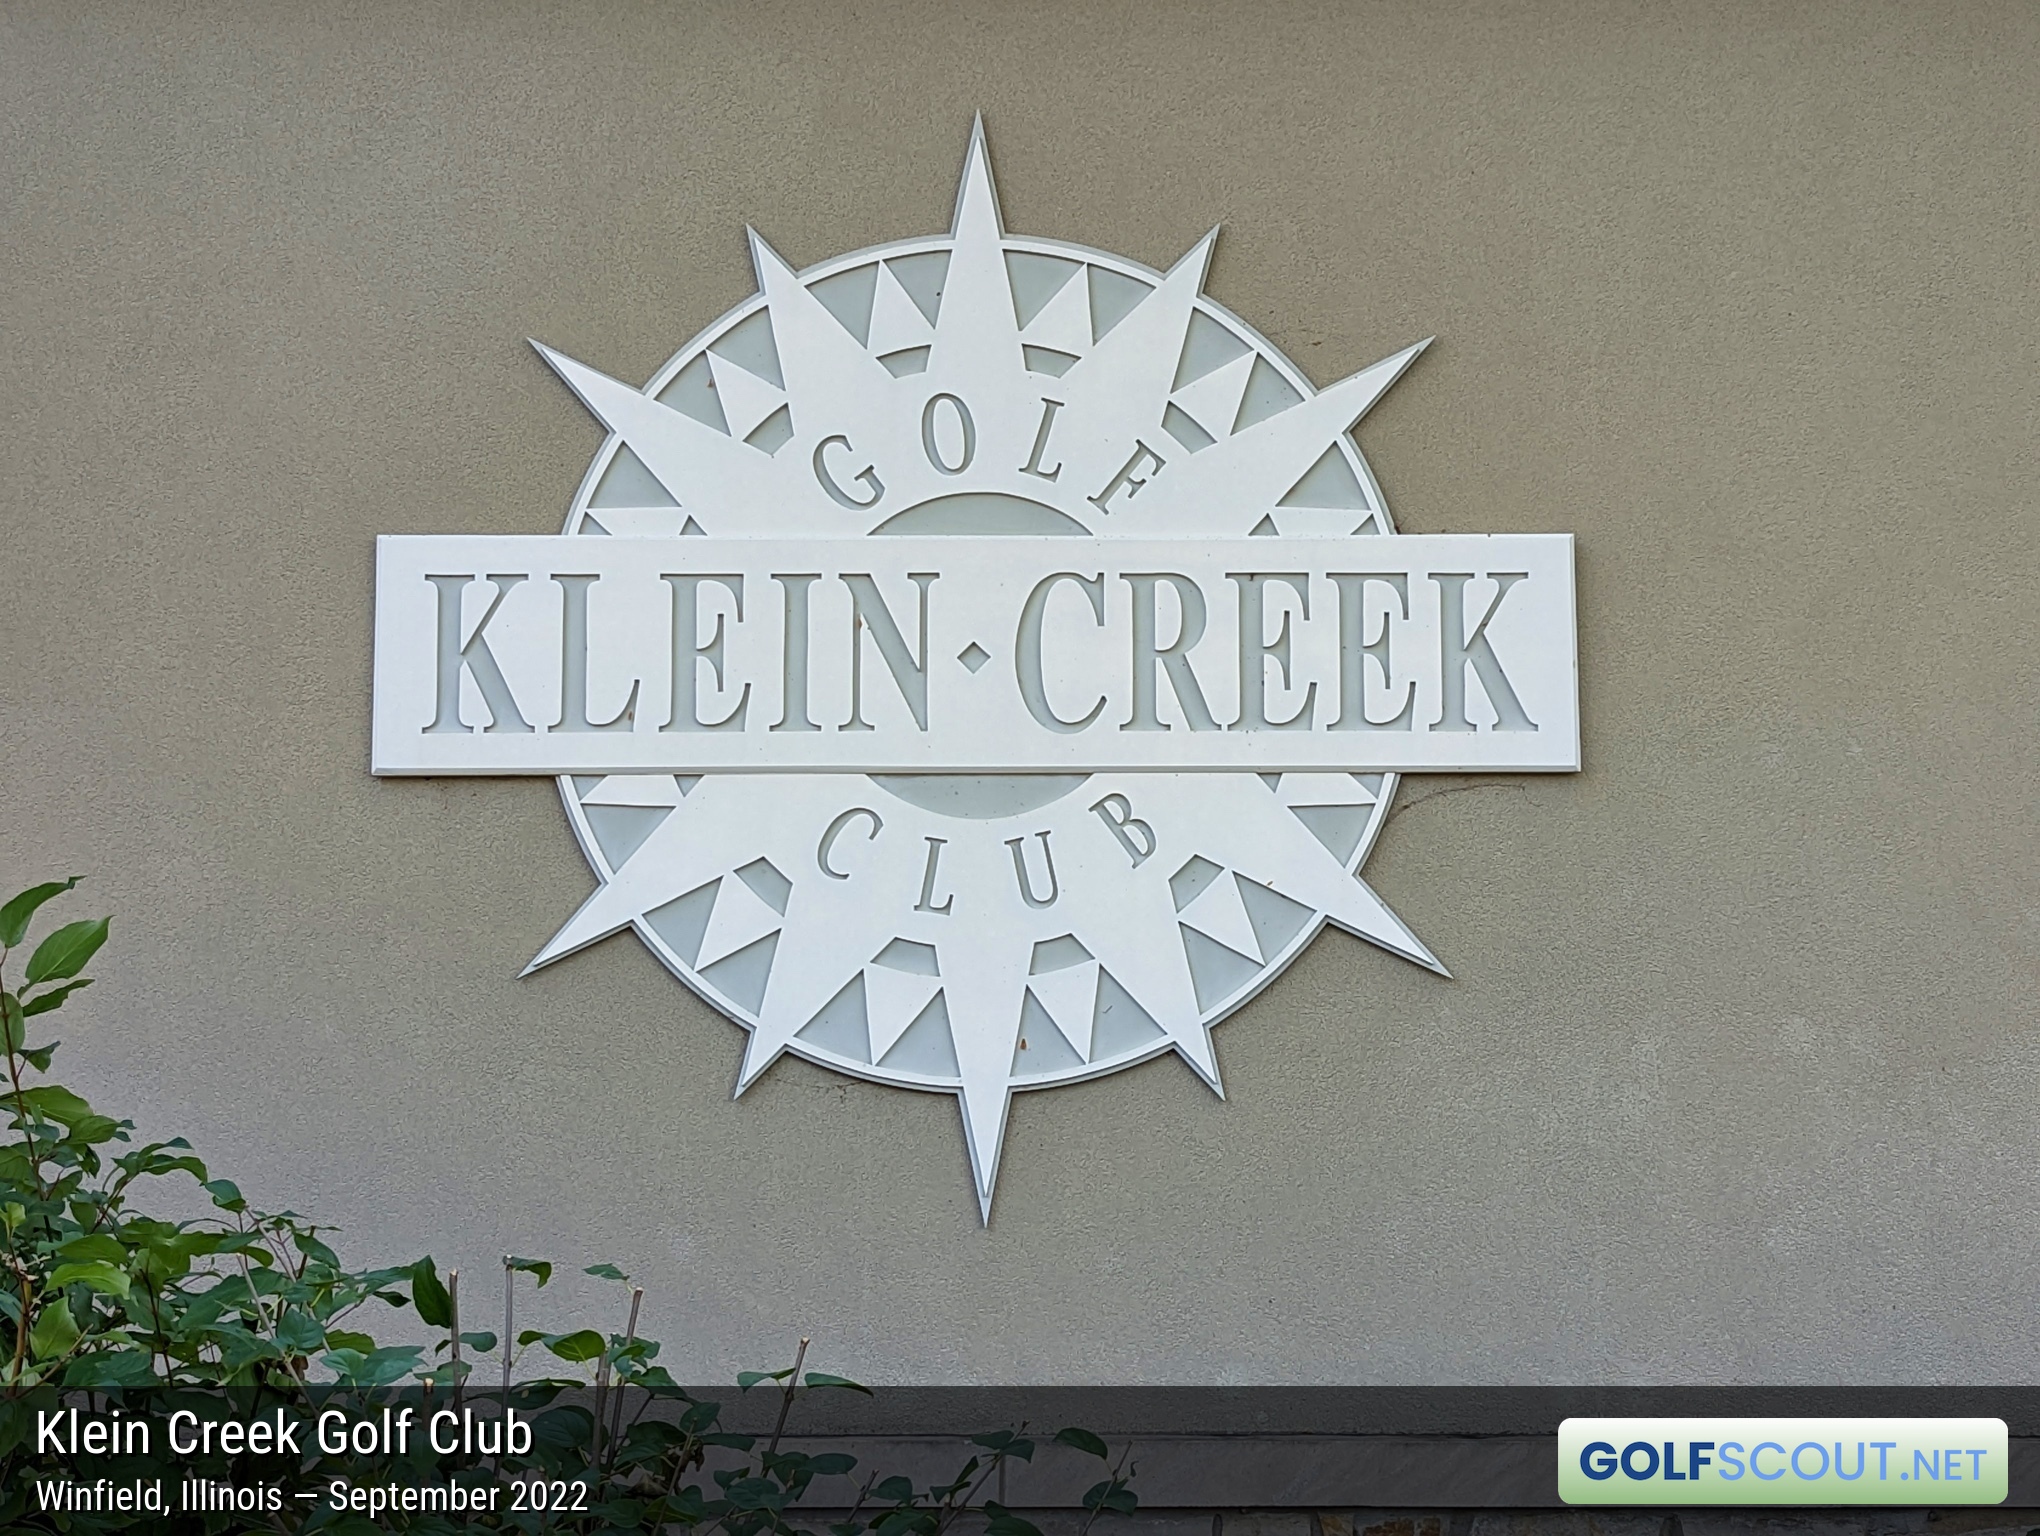 Miscellaneous photo of Klein Creek Golf Club in Winfield, Illinois. 